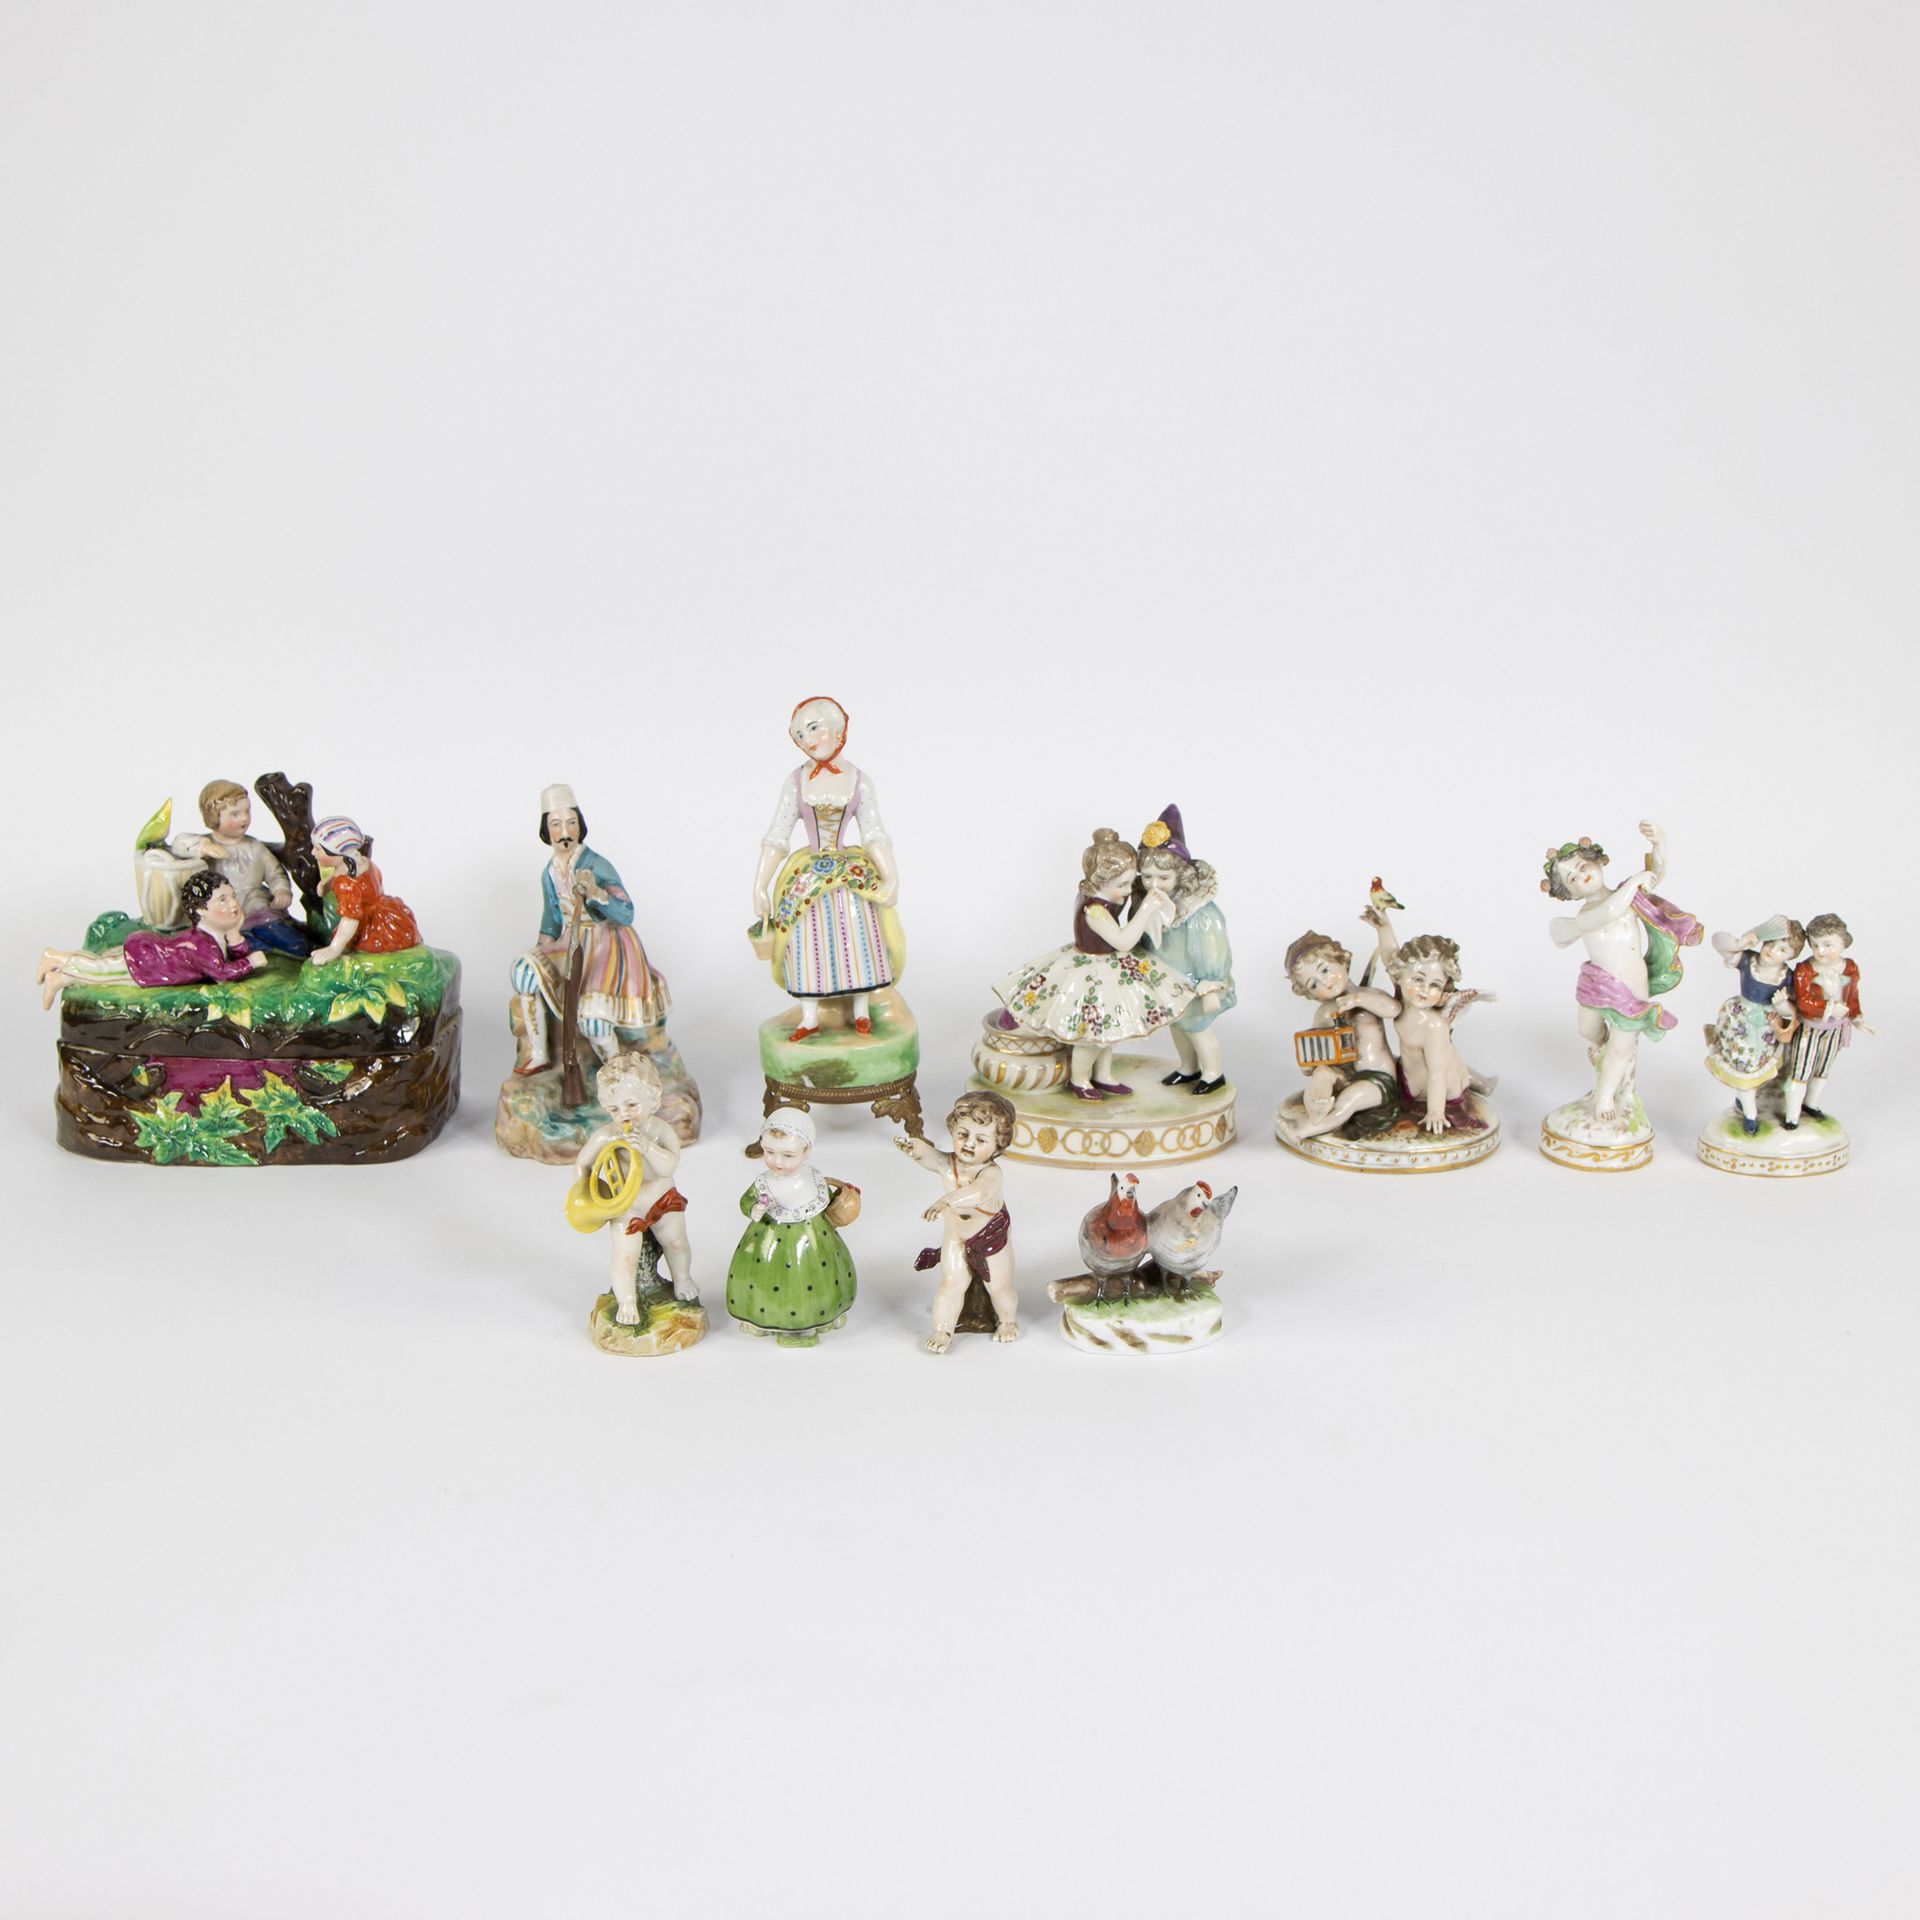 Null 包括迈森、Capo di Monti在内的多色瓷器人物和带盖盒子收藏品
多彩瓷器人物及盒盖收藏品，包括迈森，Capo di Monti
高6.5 - &hellip;